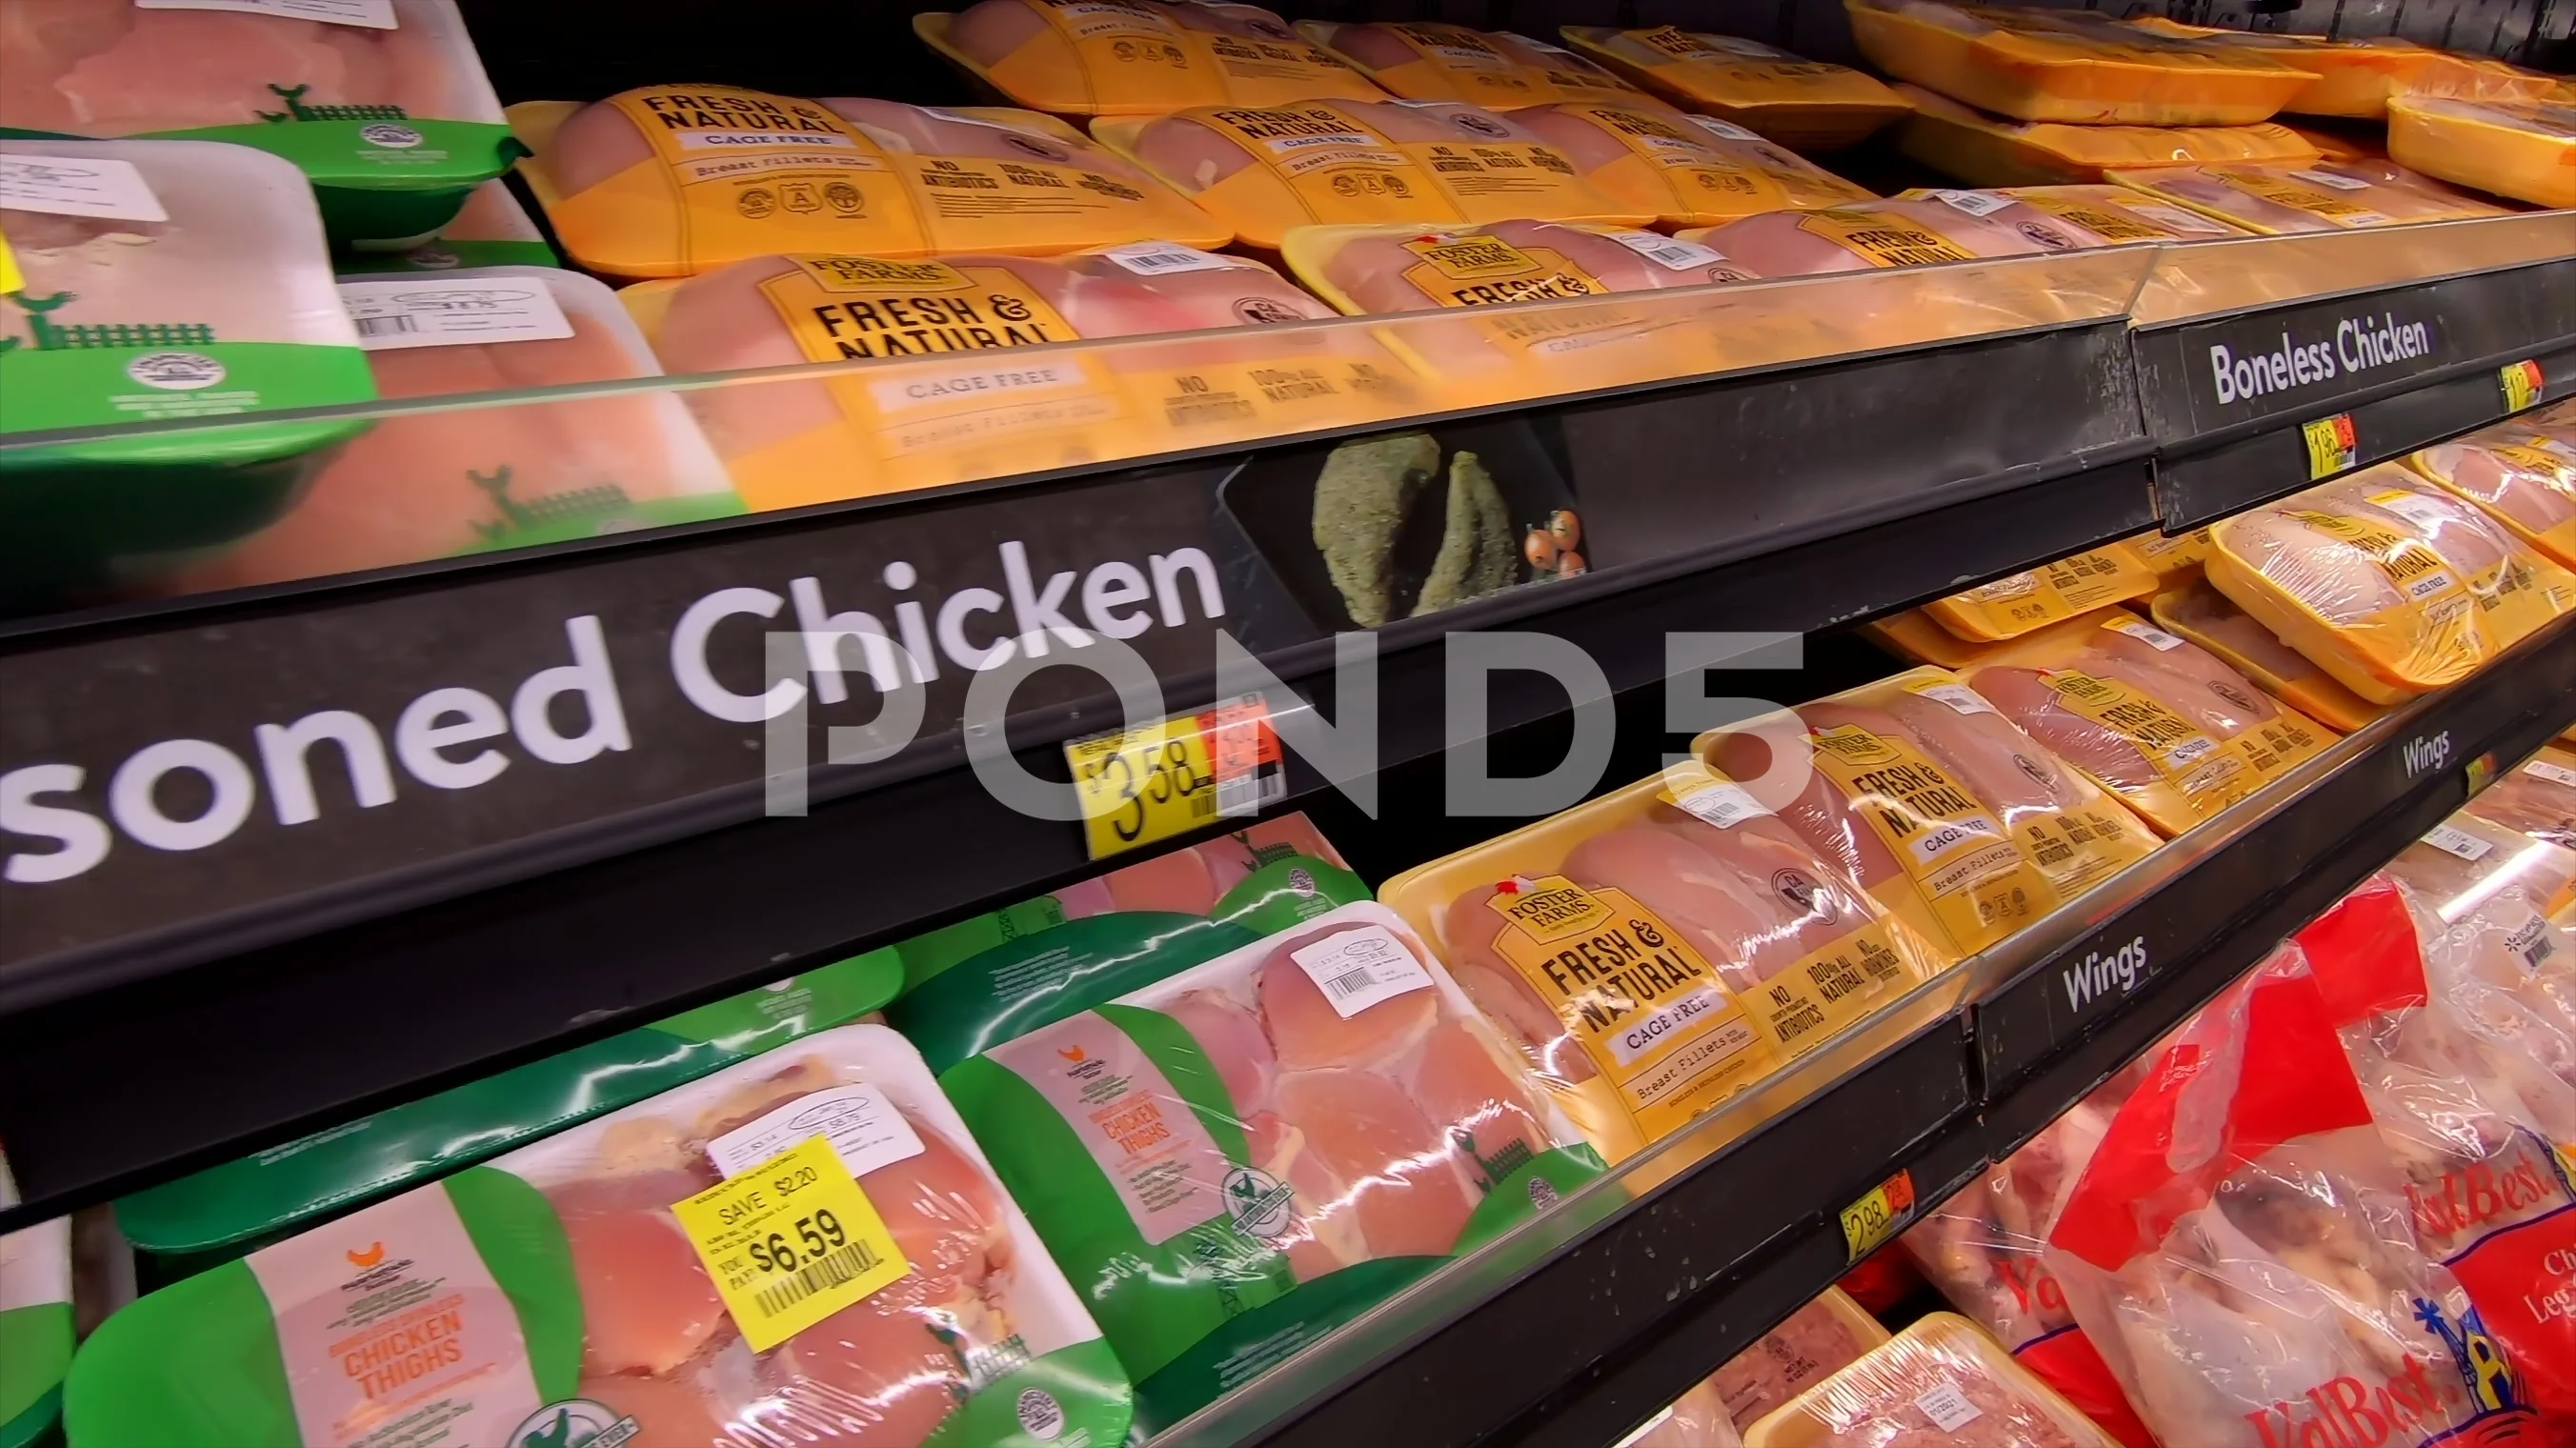 https://images.pond5.com/fresh-packaged-chicken-aisle-grocery-147550892_prevstill.jpeg